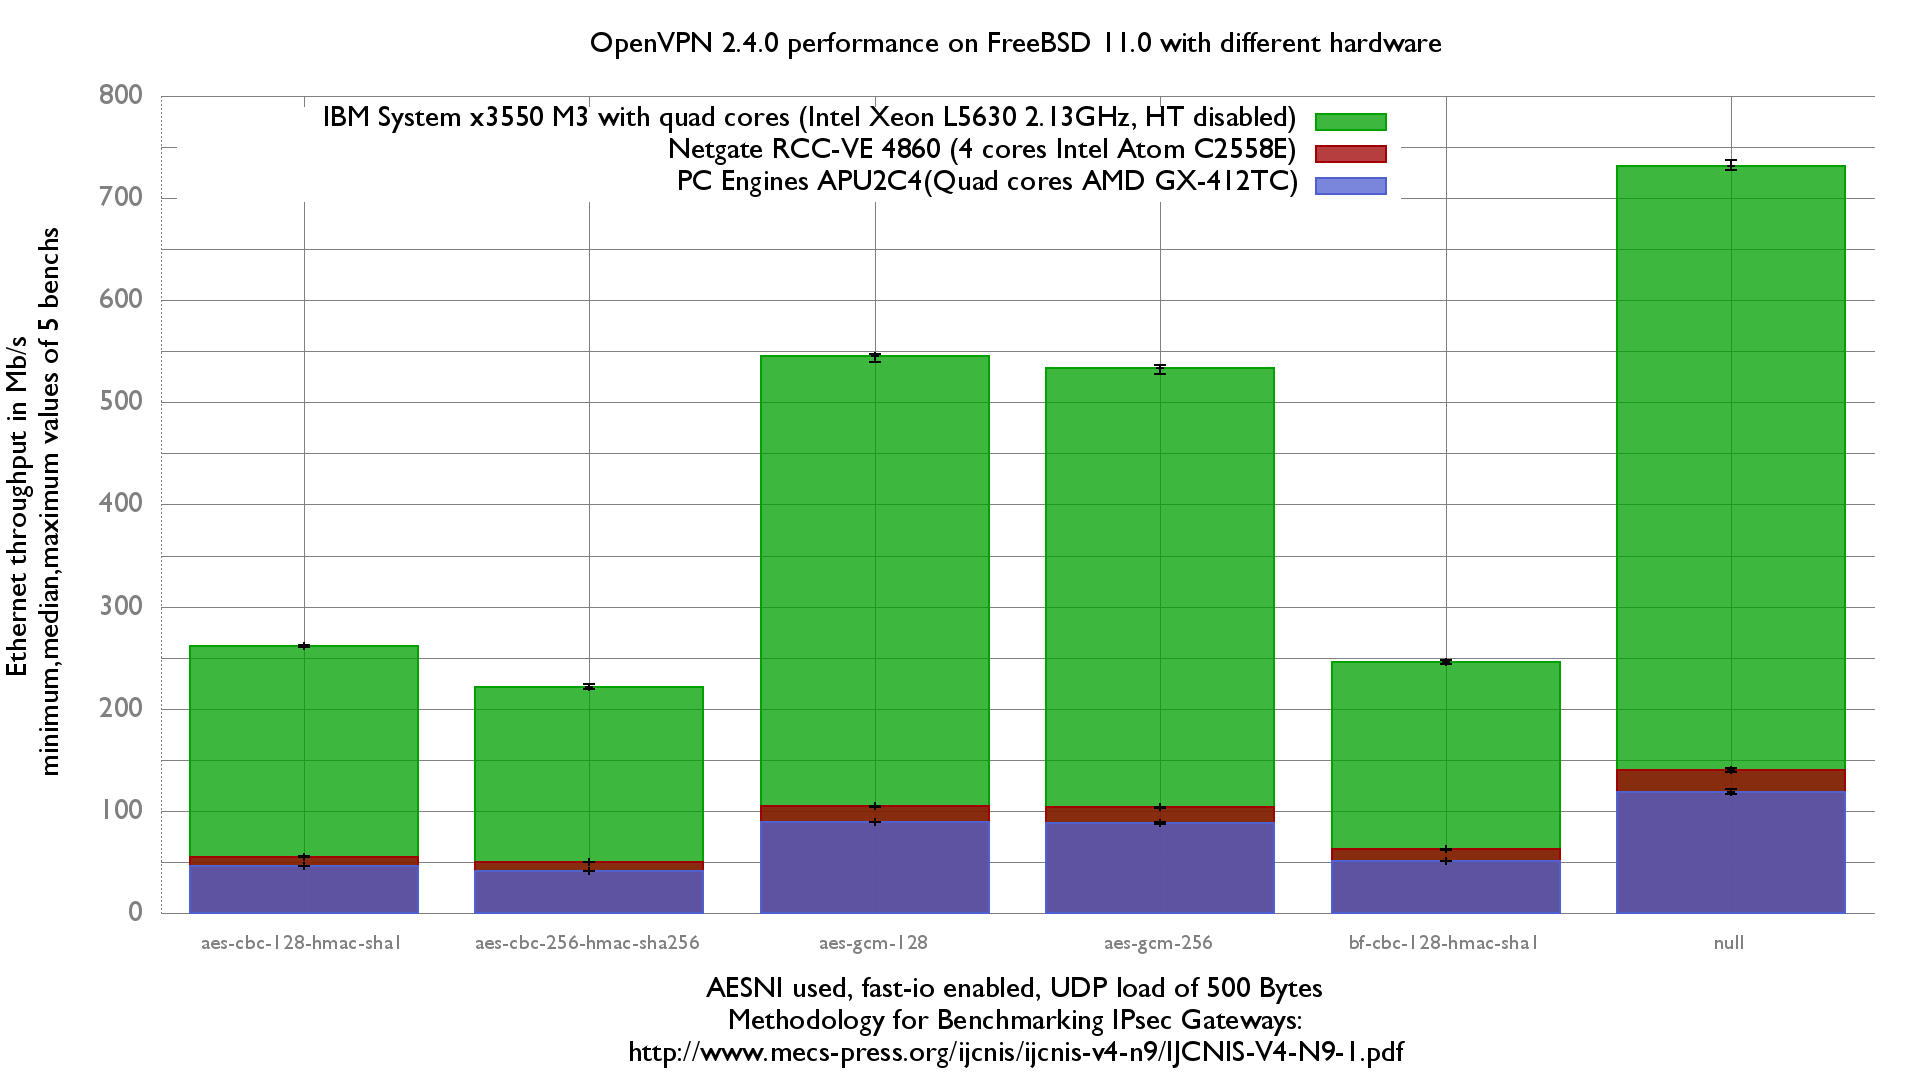 OpenVPN performance on multiple servers with FreeBSD 11.0